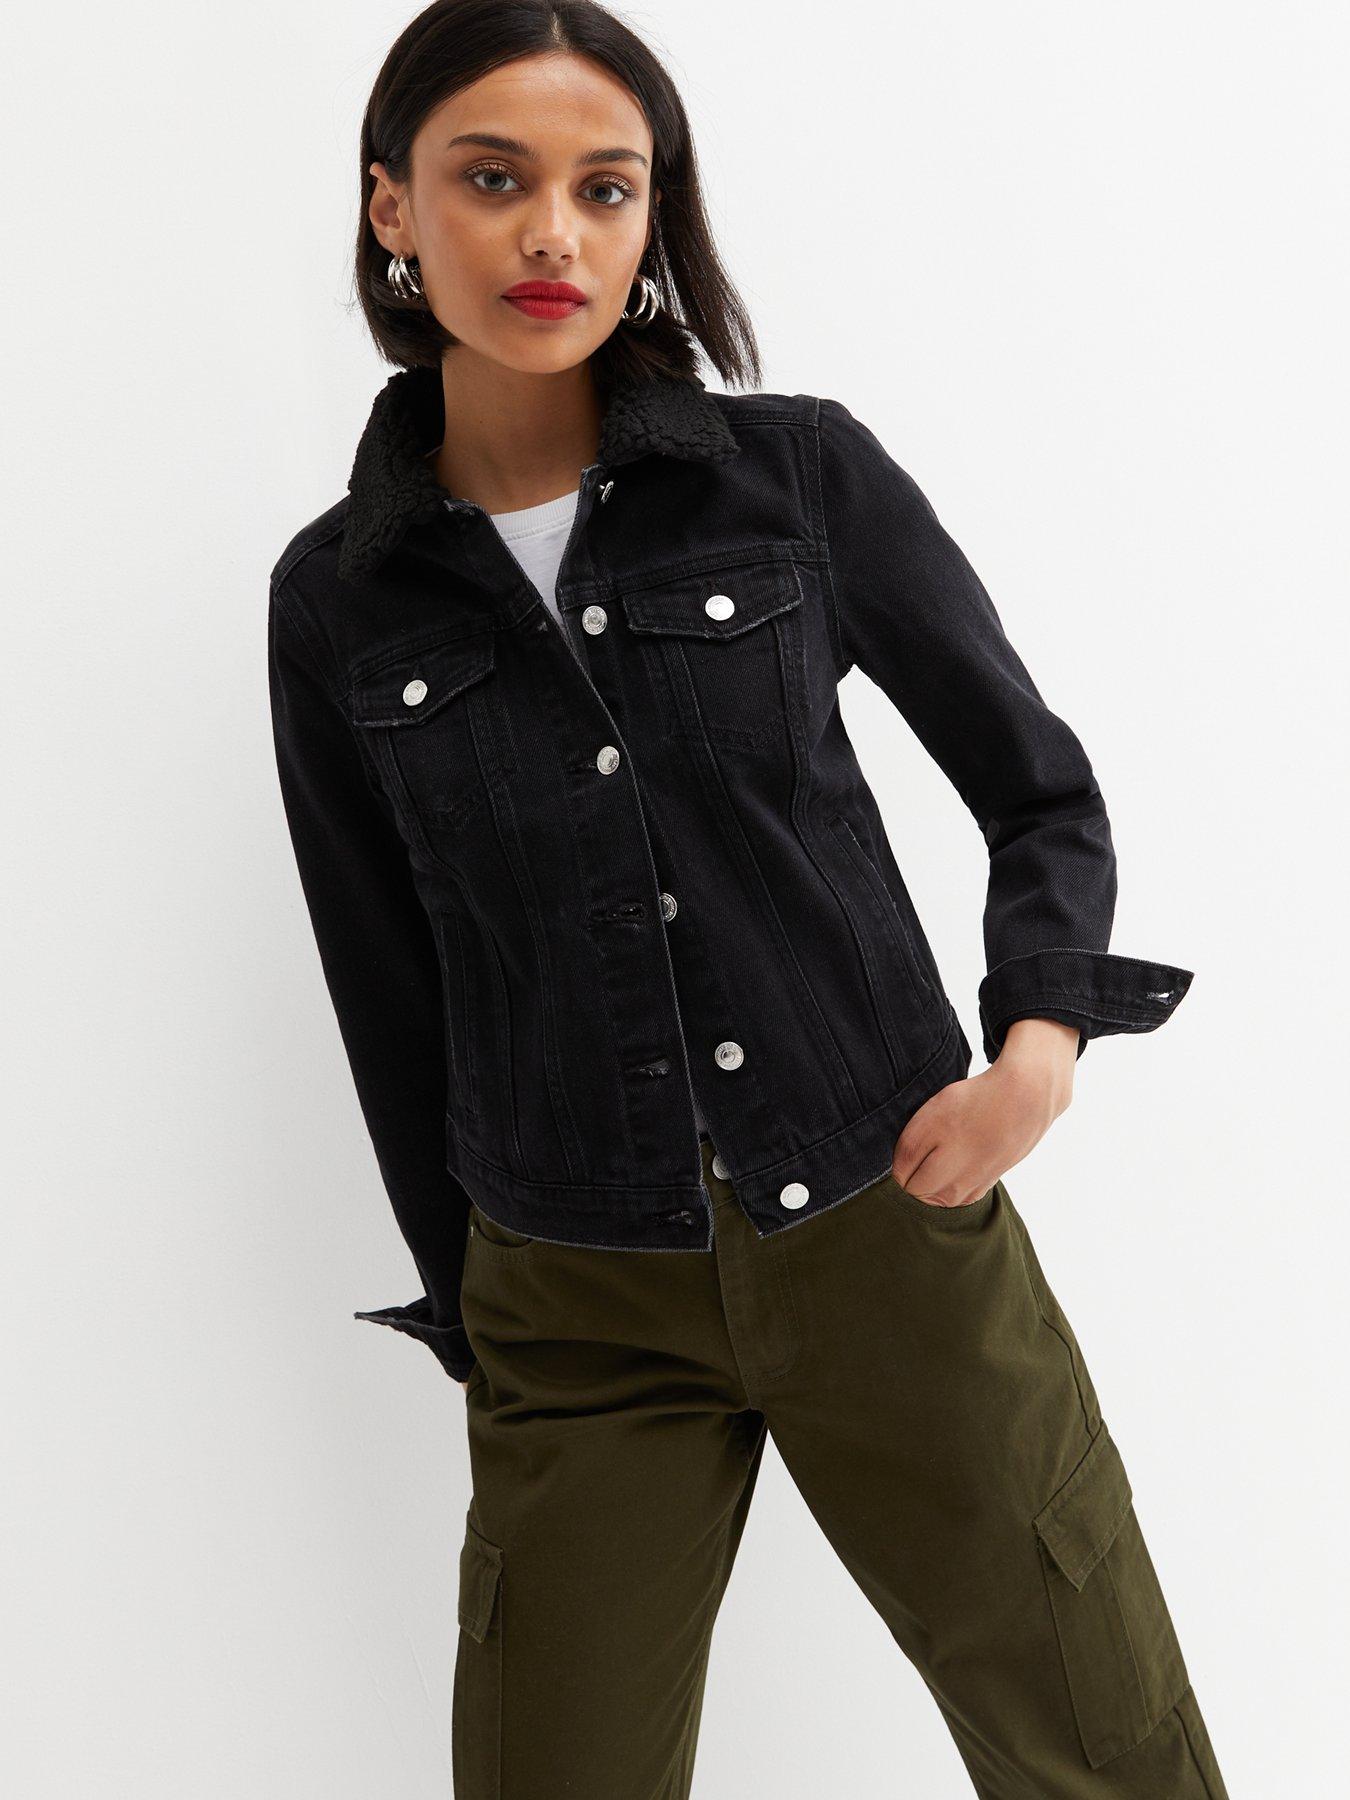 WOMEN FASHION Jackets Combined Black S discount 67% Zara vest 